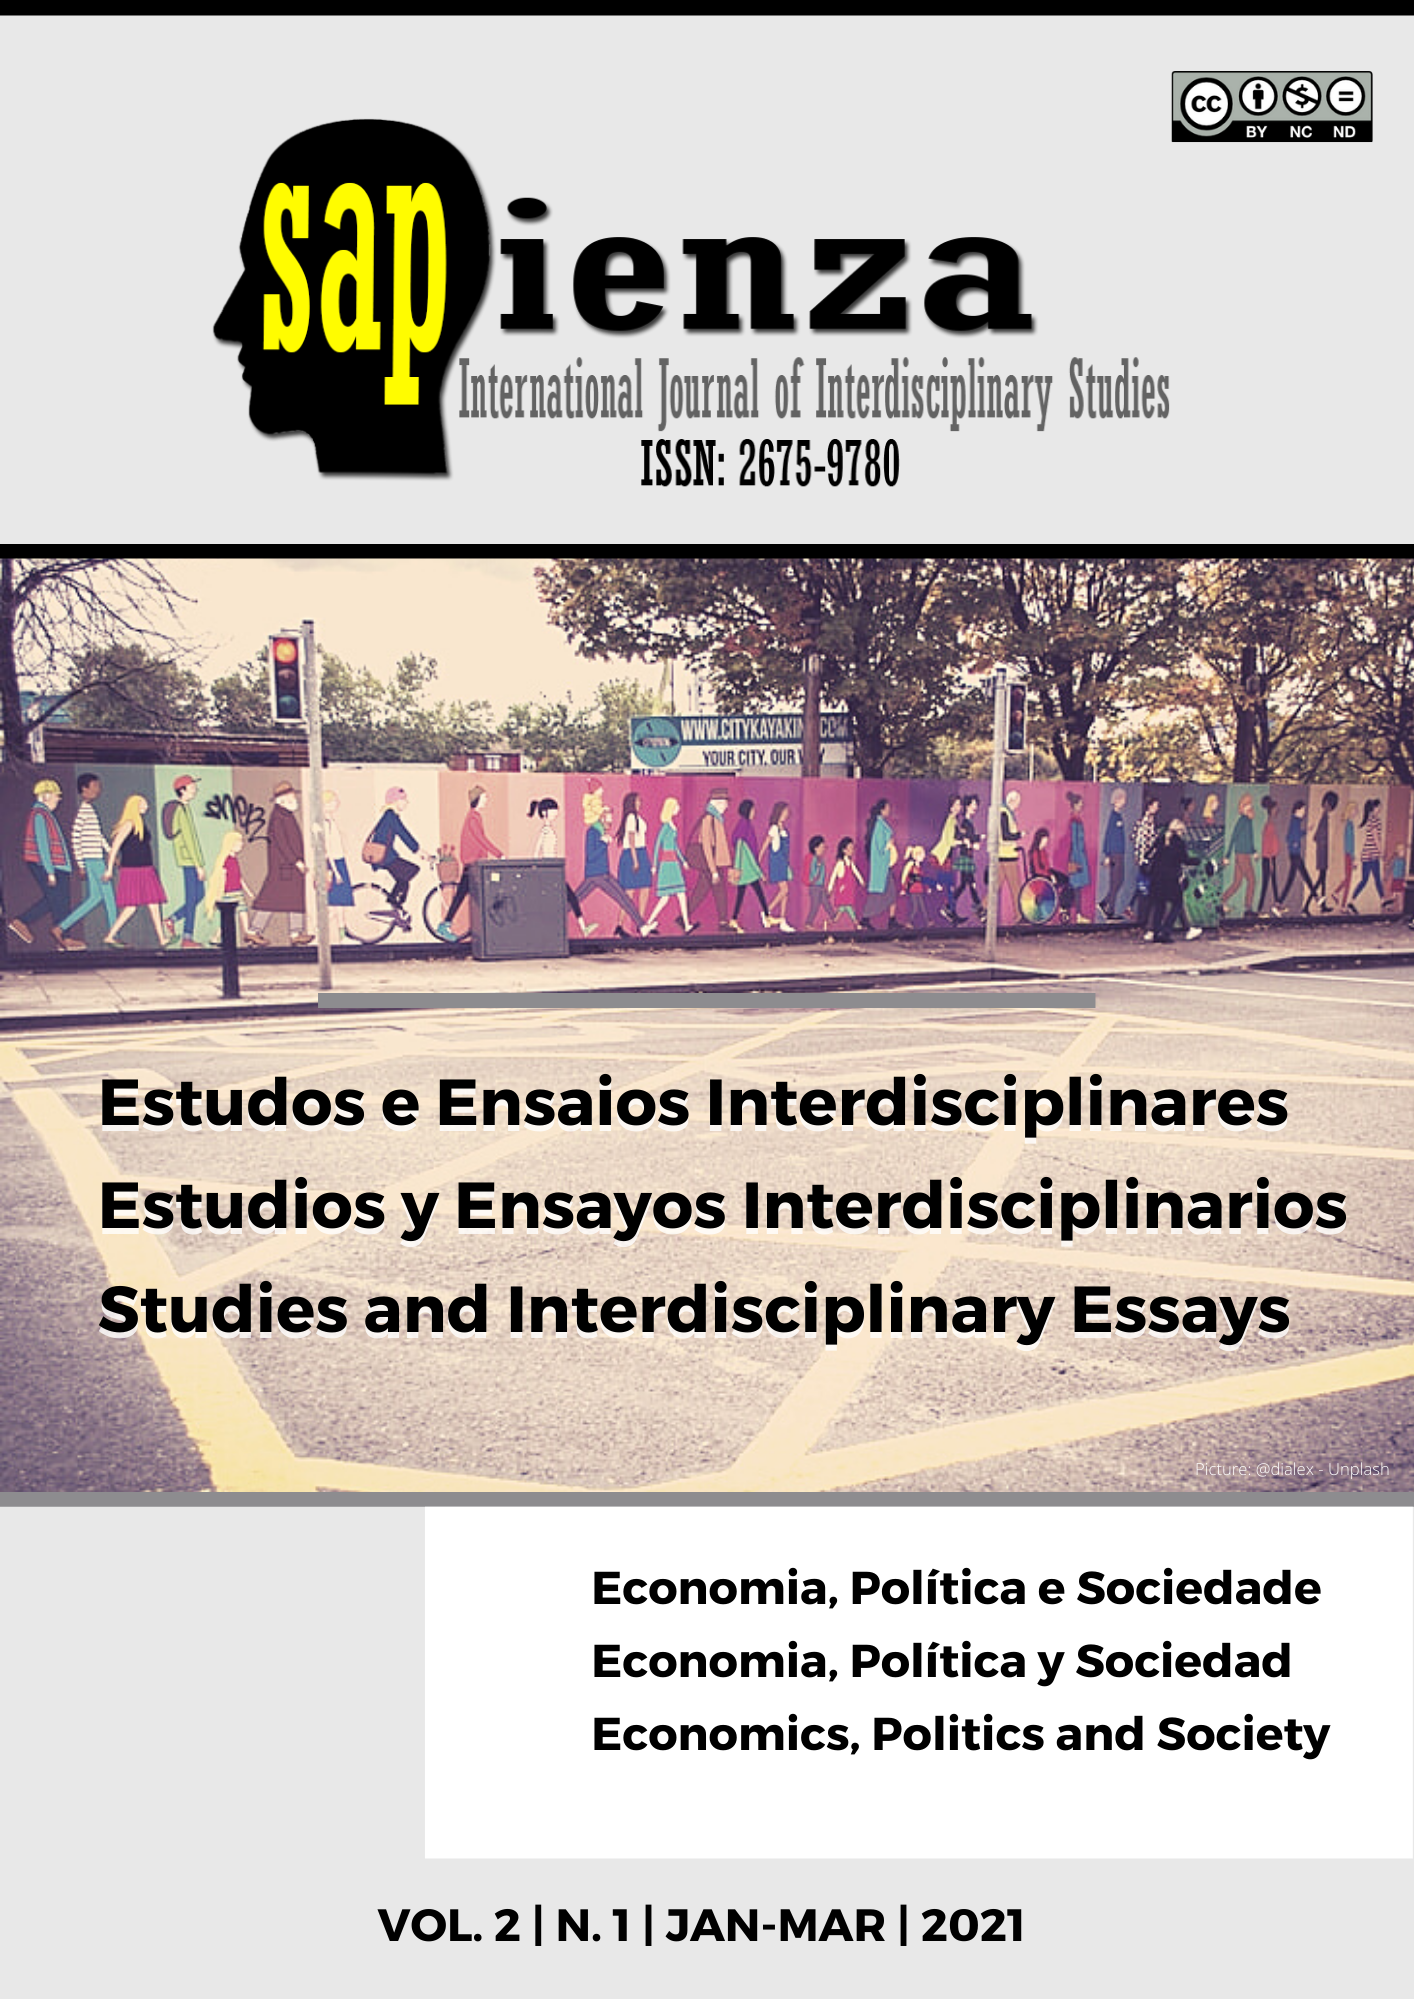 					View Vol. 2 No. 1 (2021): Studies and interdisciplinary essays in Economics, Politics and Society
				